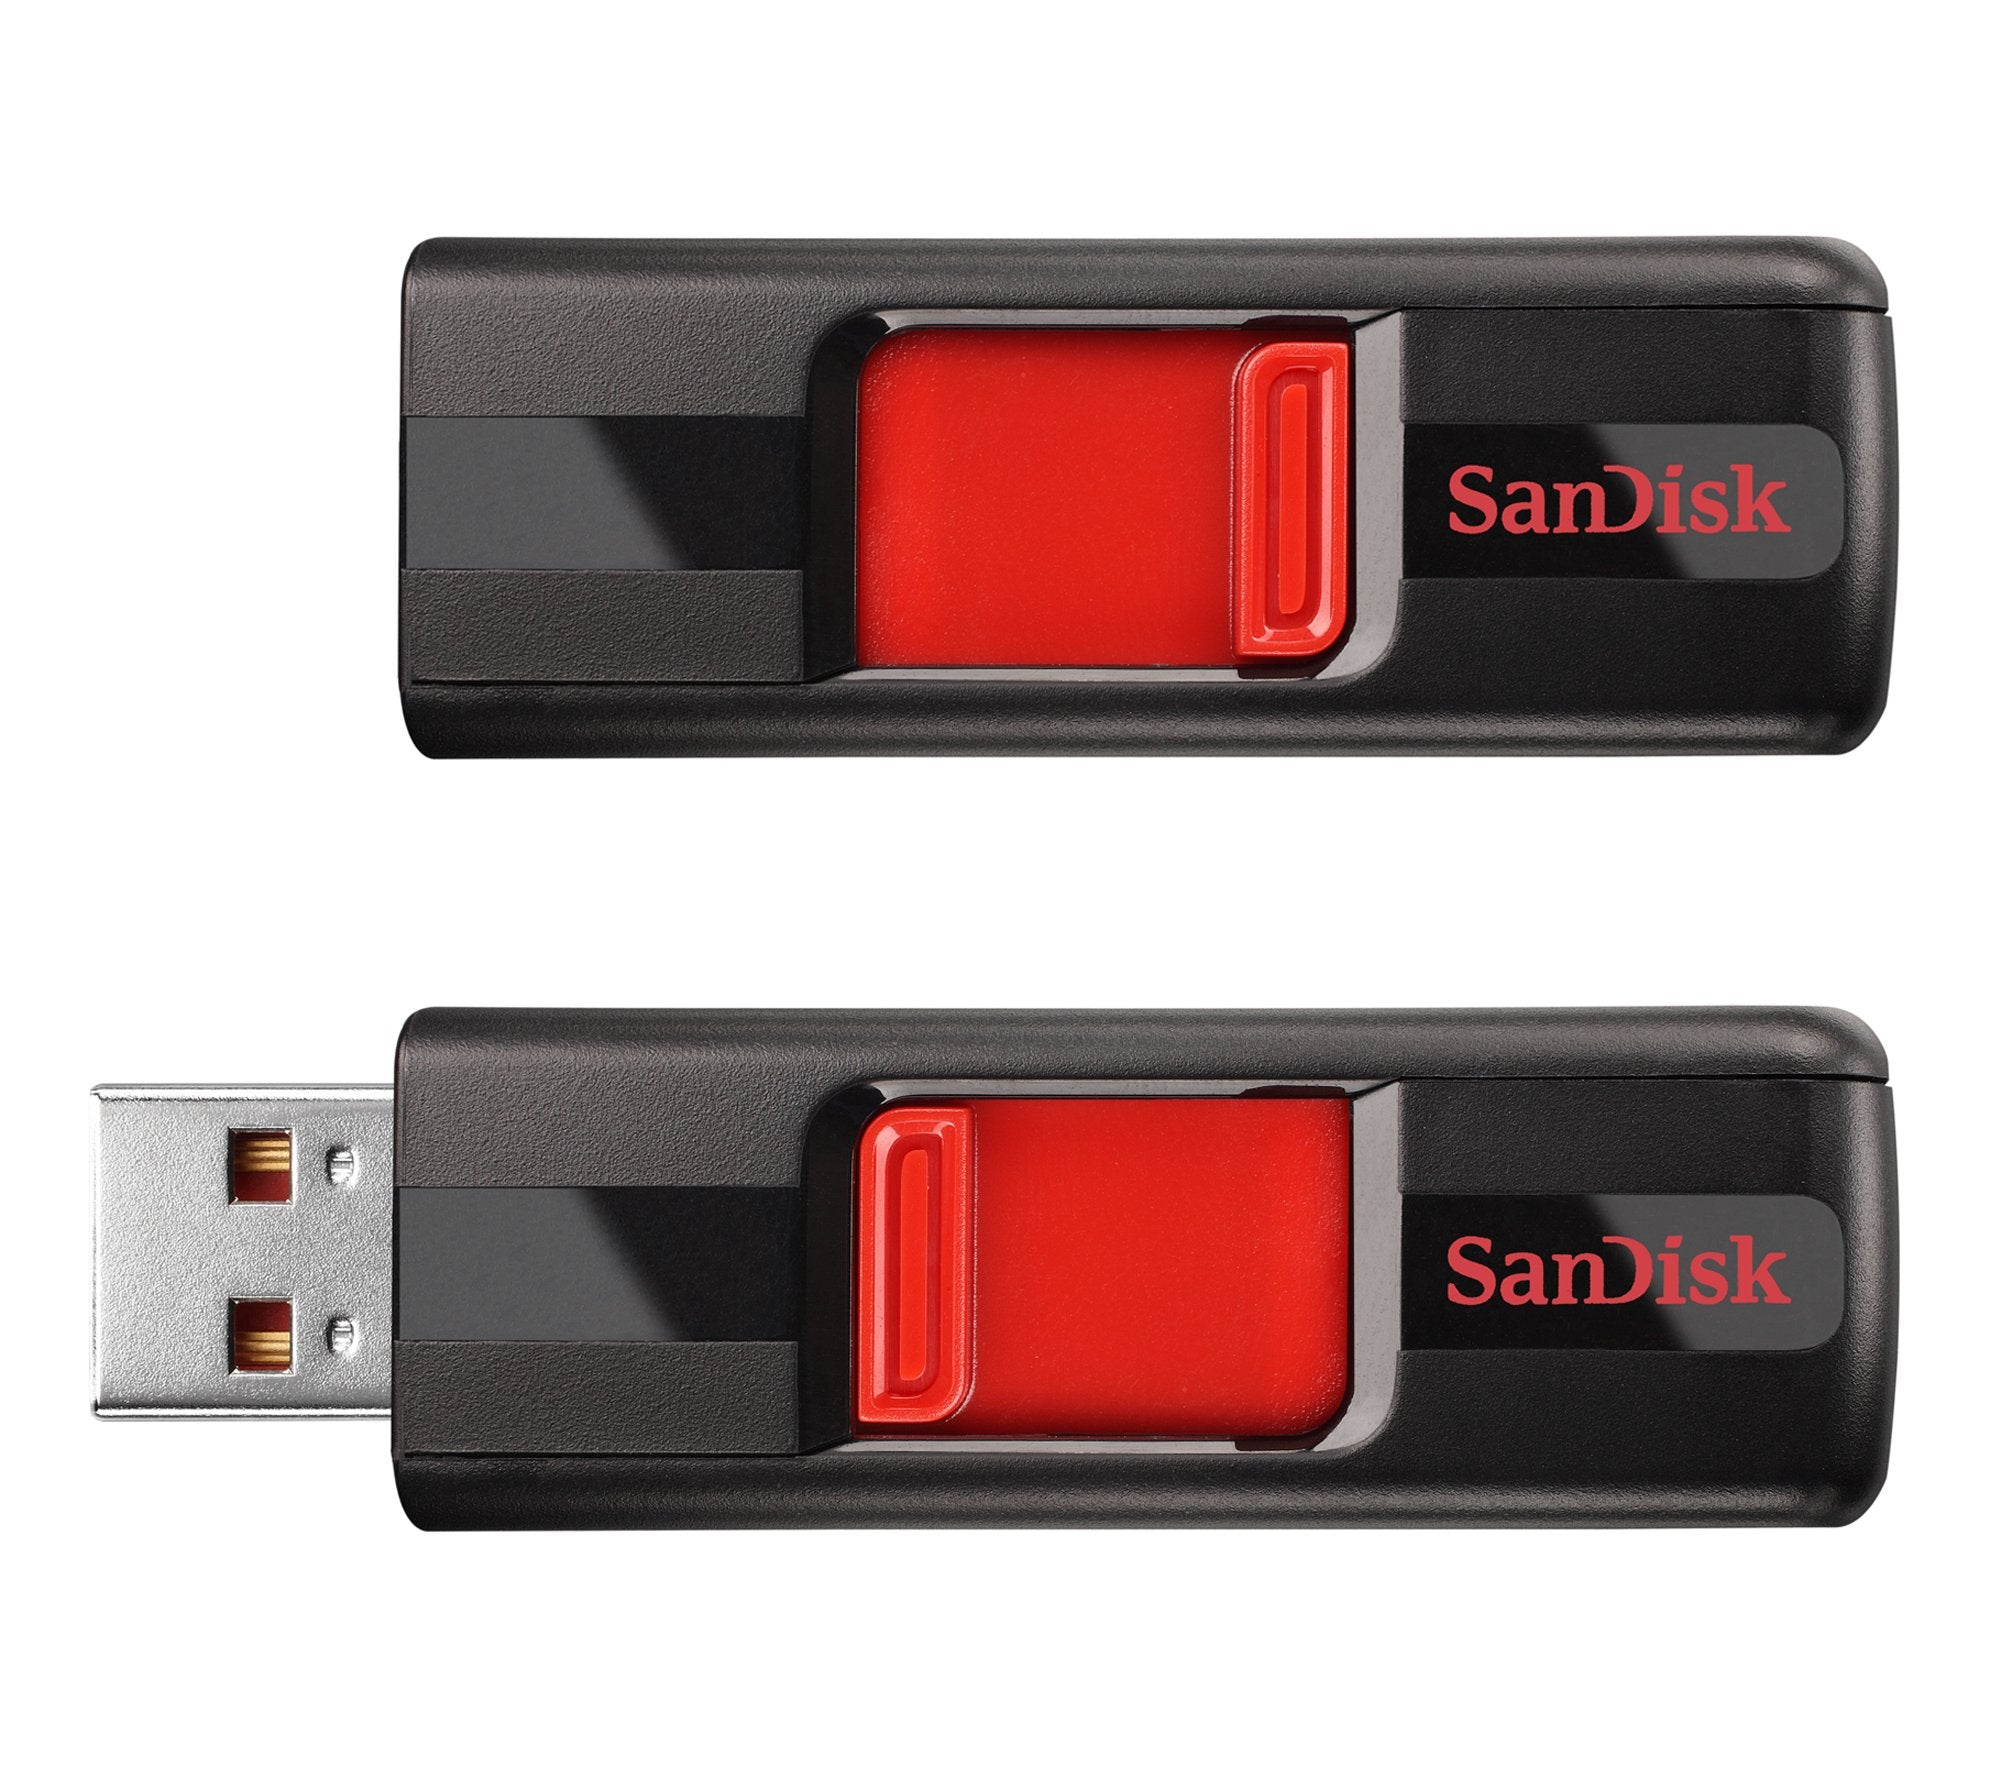 SanDisk 16GB 2-Pack Cruzer USB 2.0 Flash Drive (2x16GB) - SDCZ36-016G-AFFP2